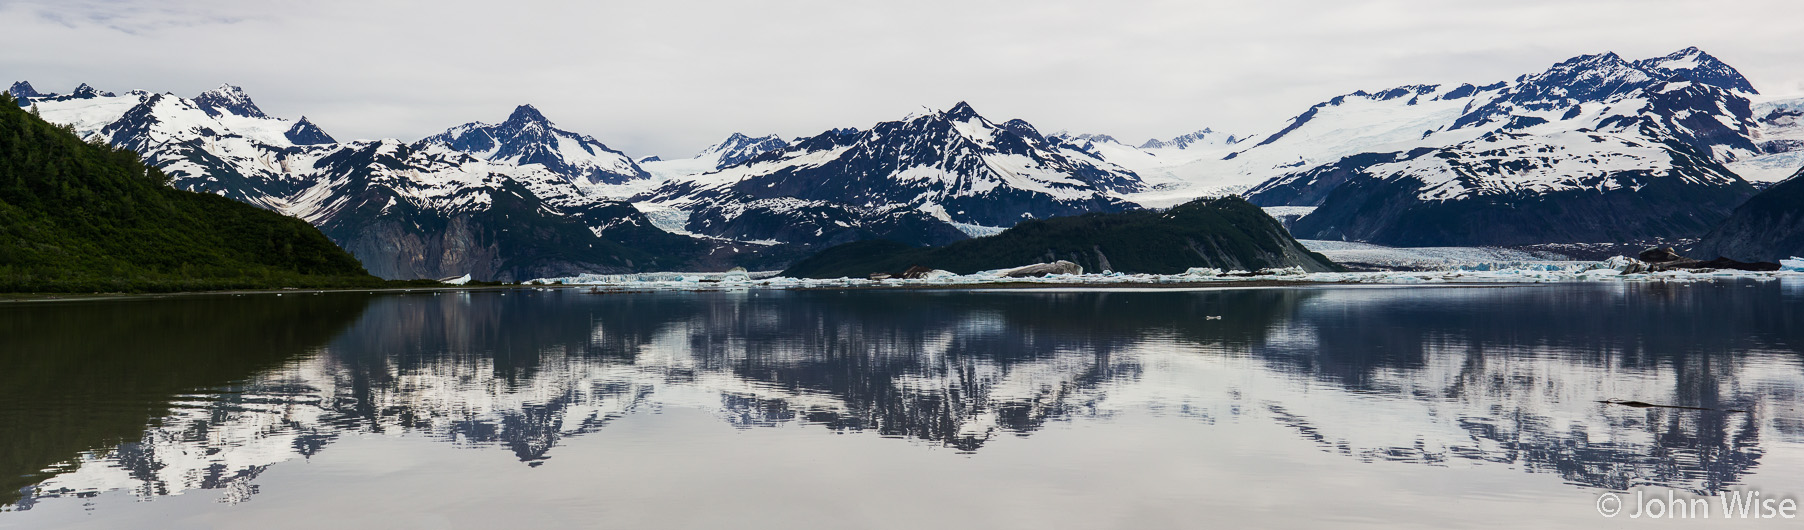 Midday on Alsek Lake in Alaska